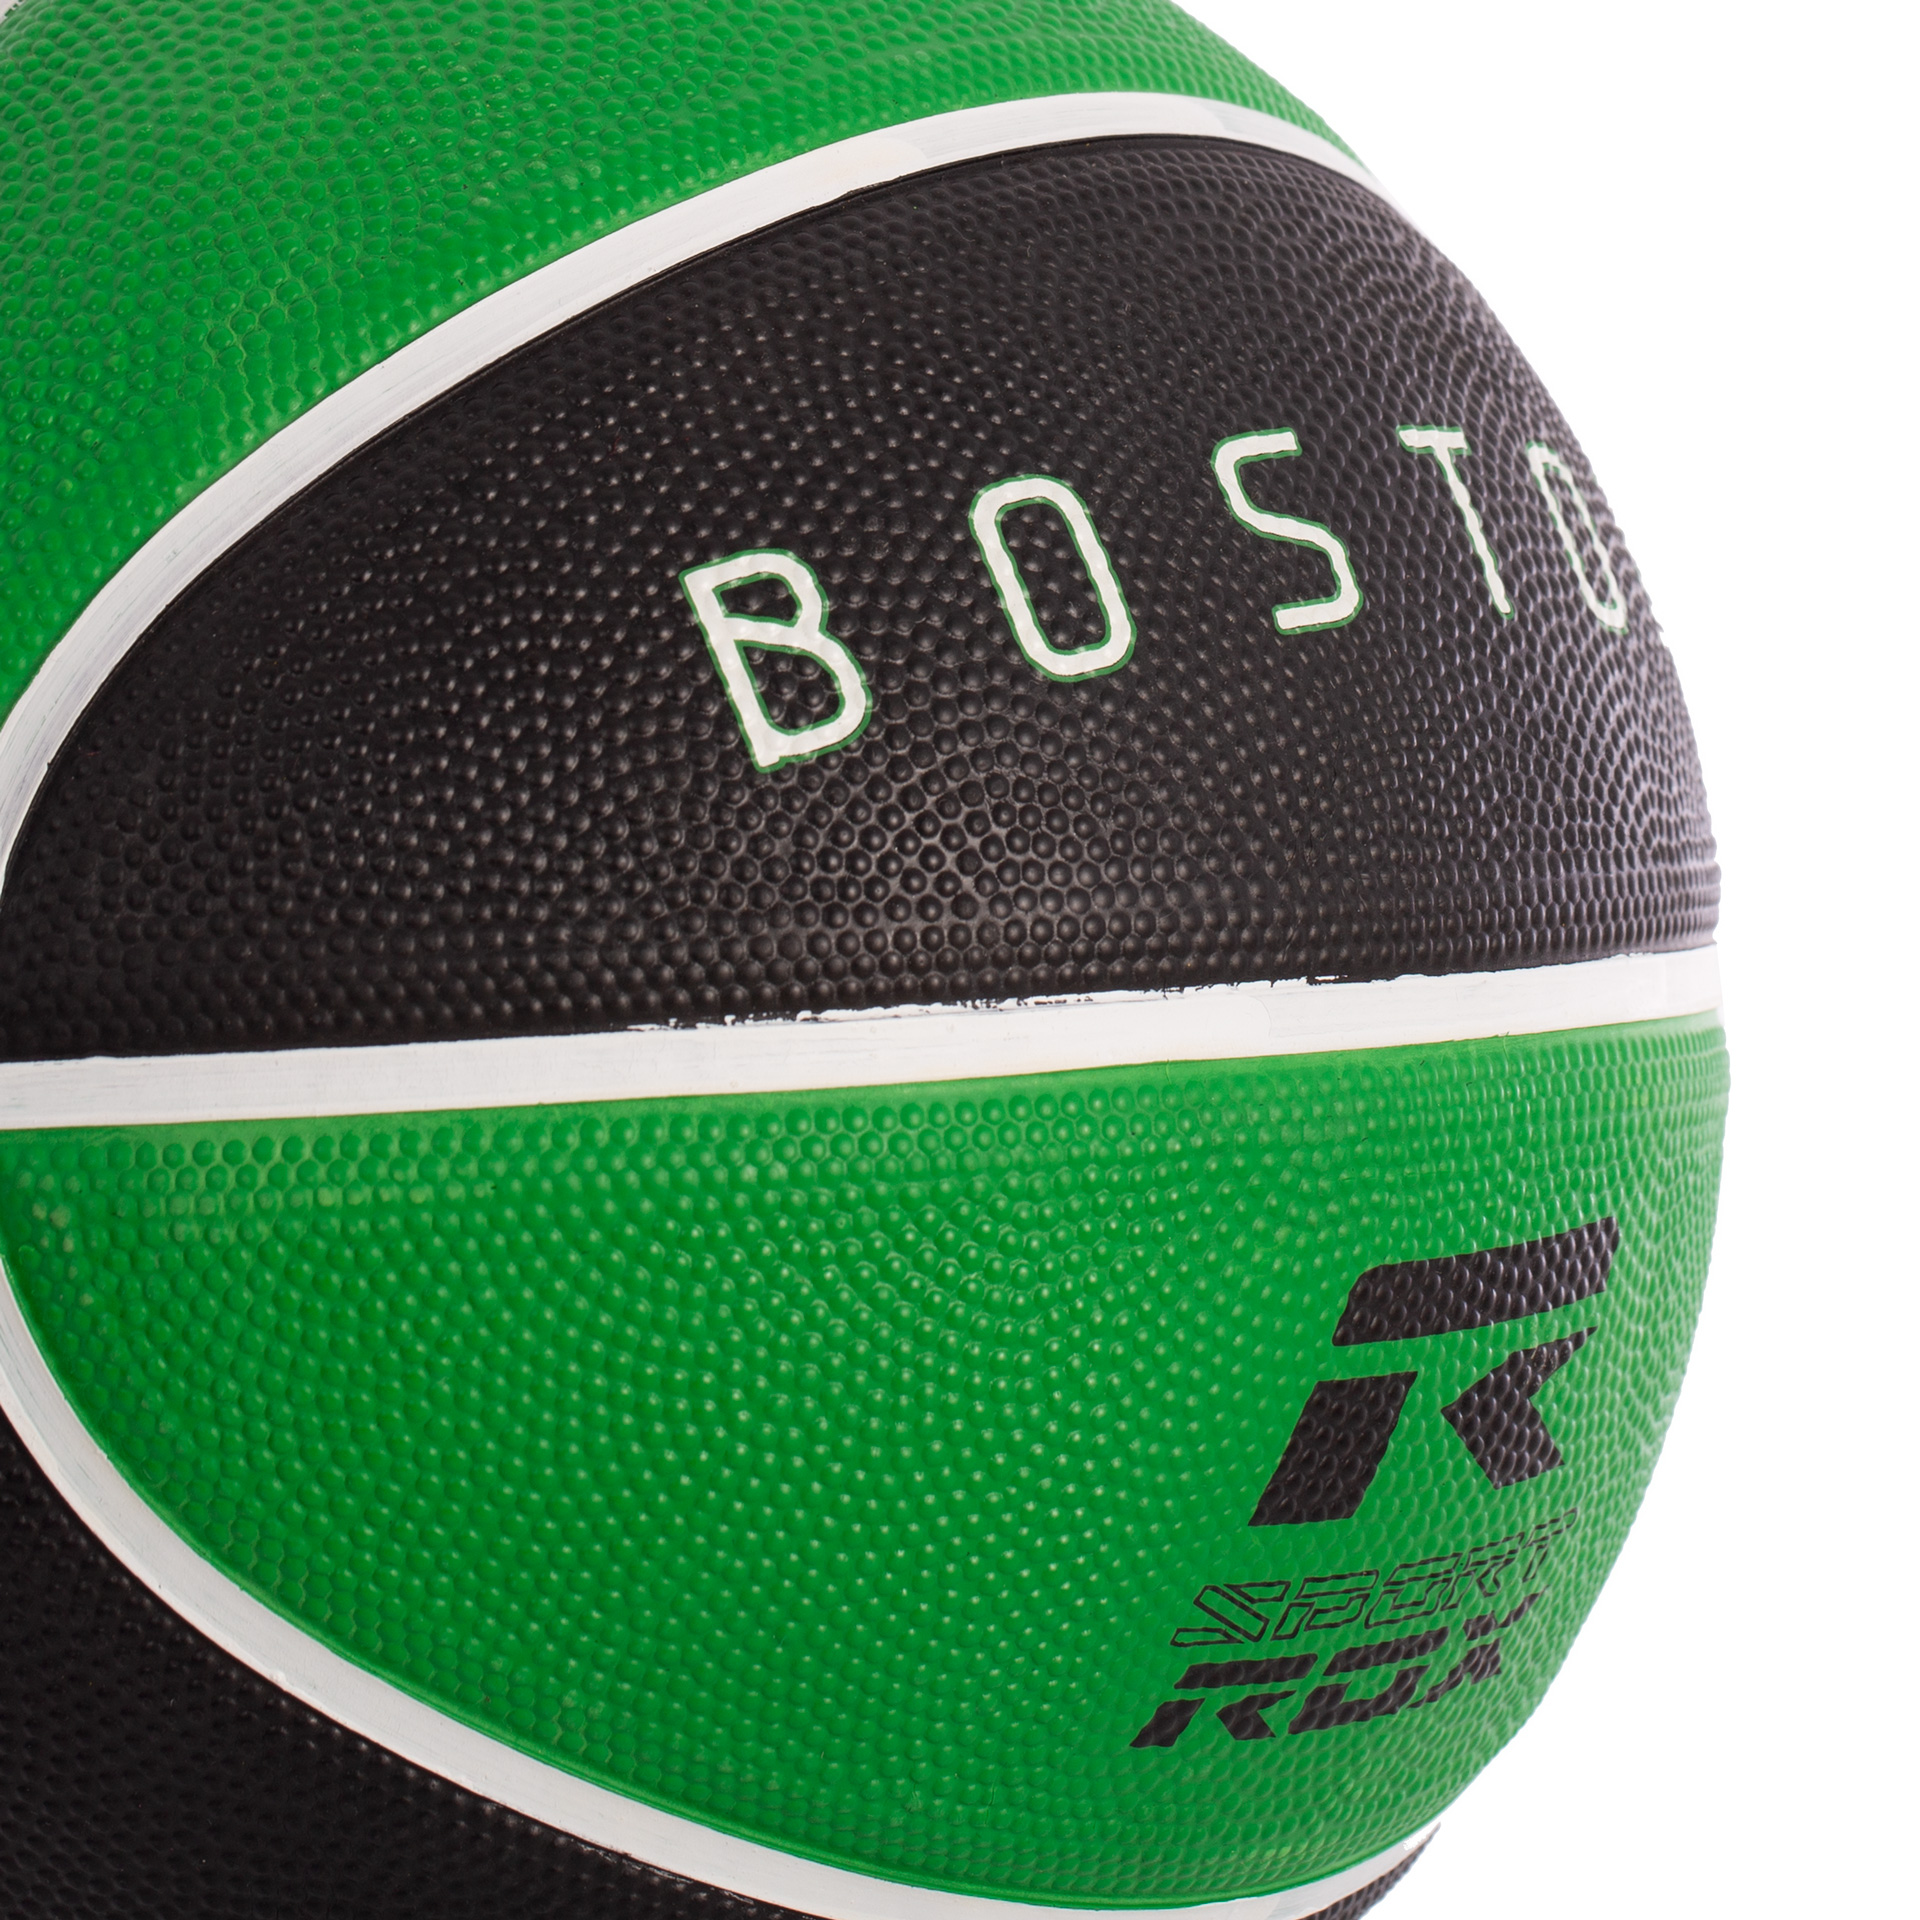 balón baloncesto nylon rox boston verde negro 1